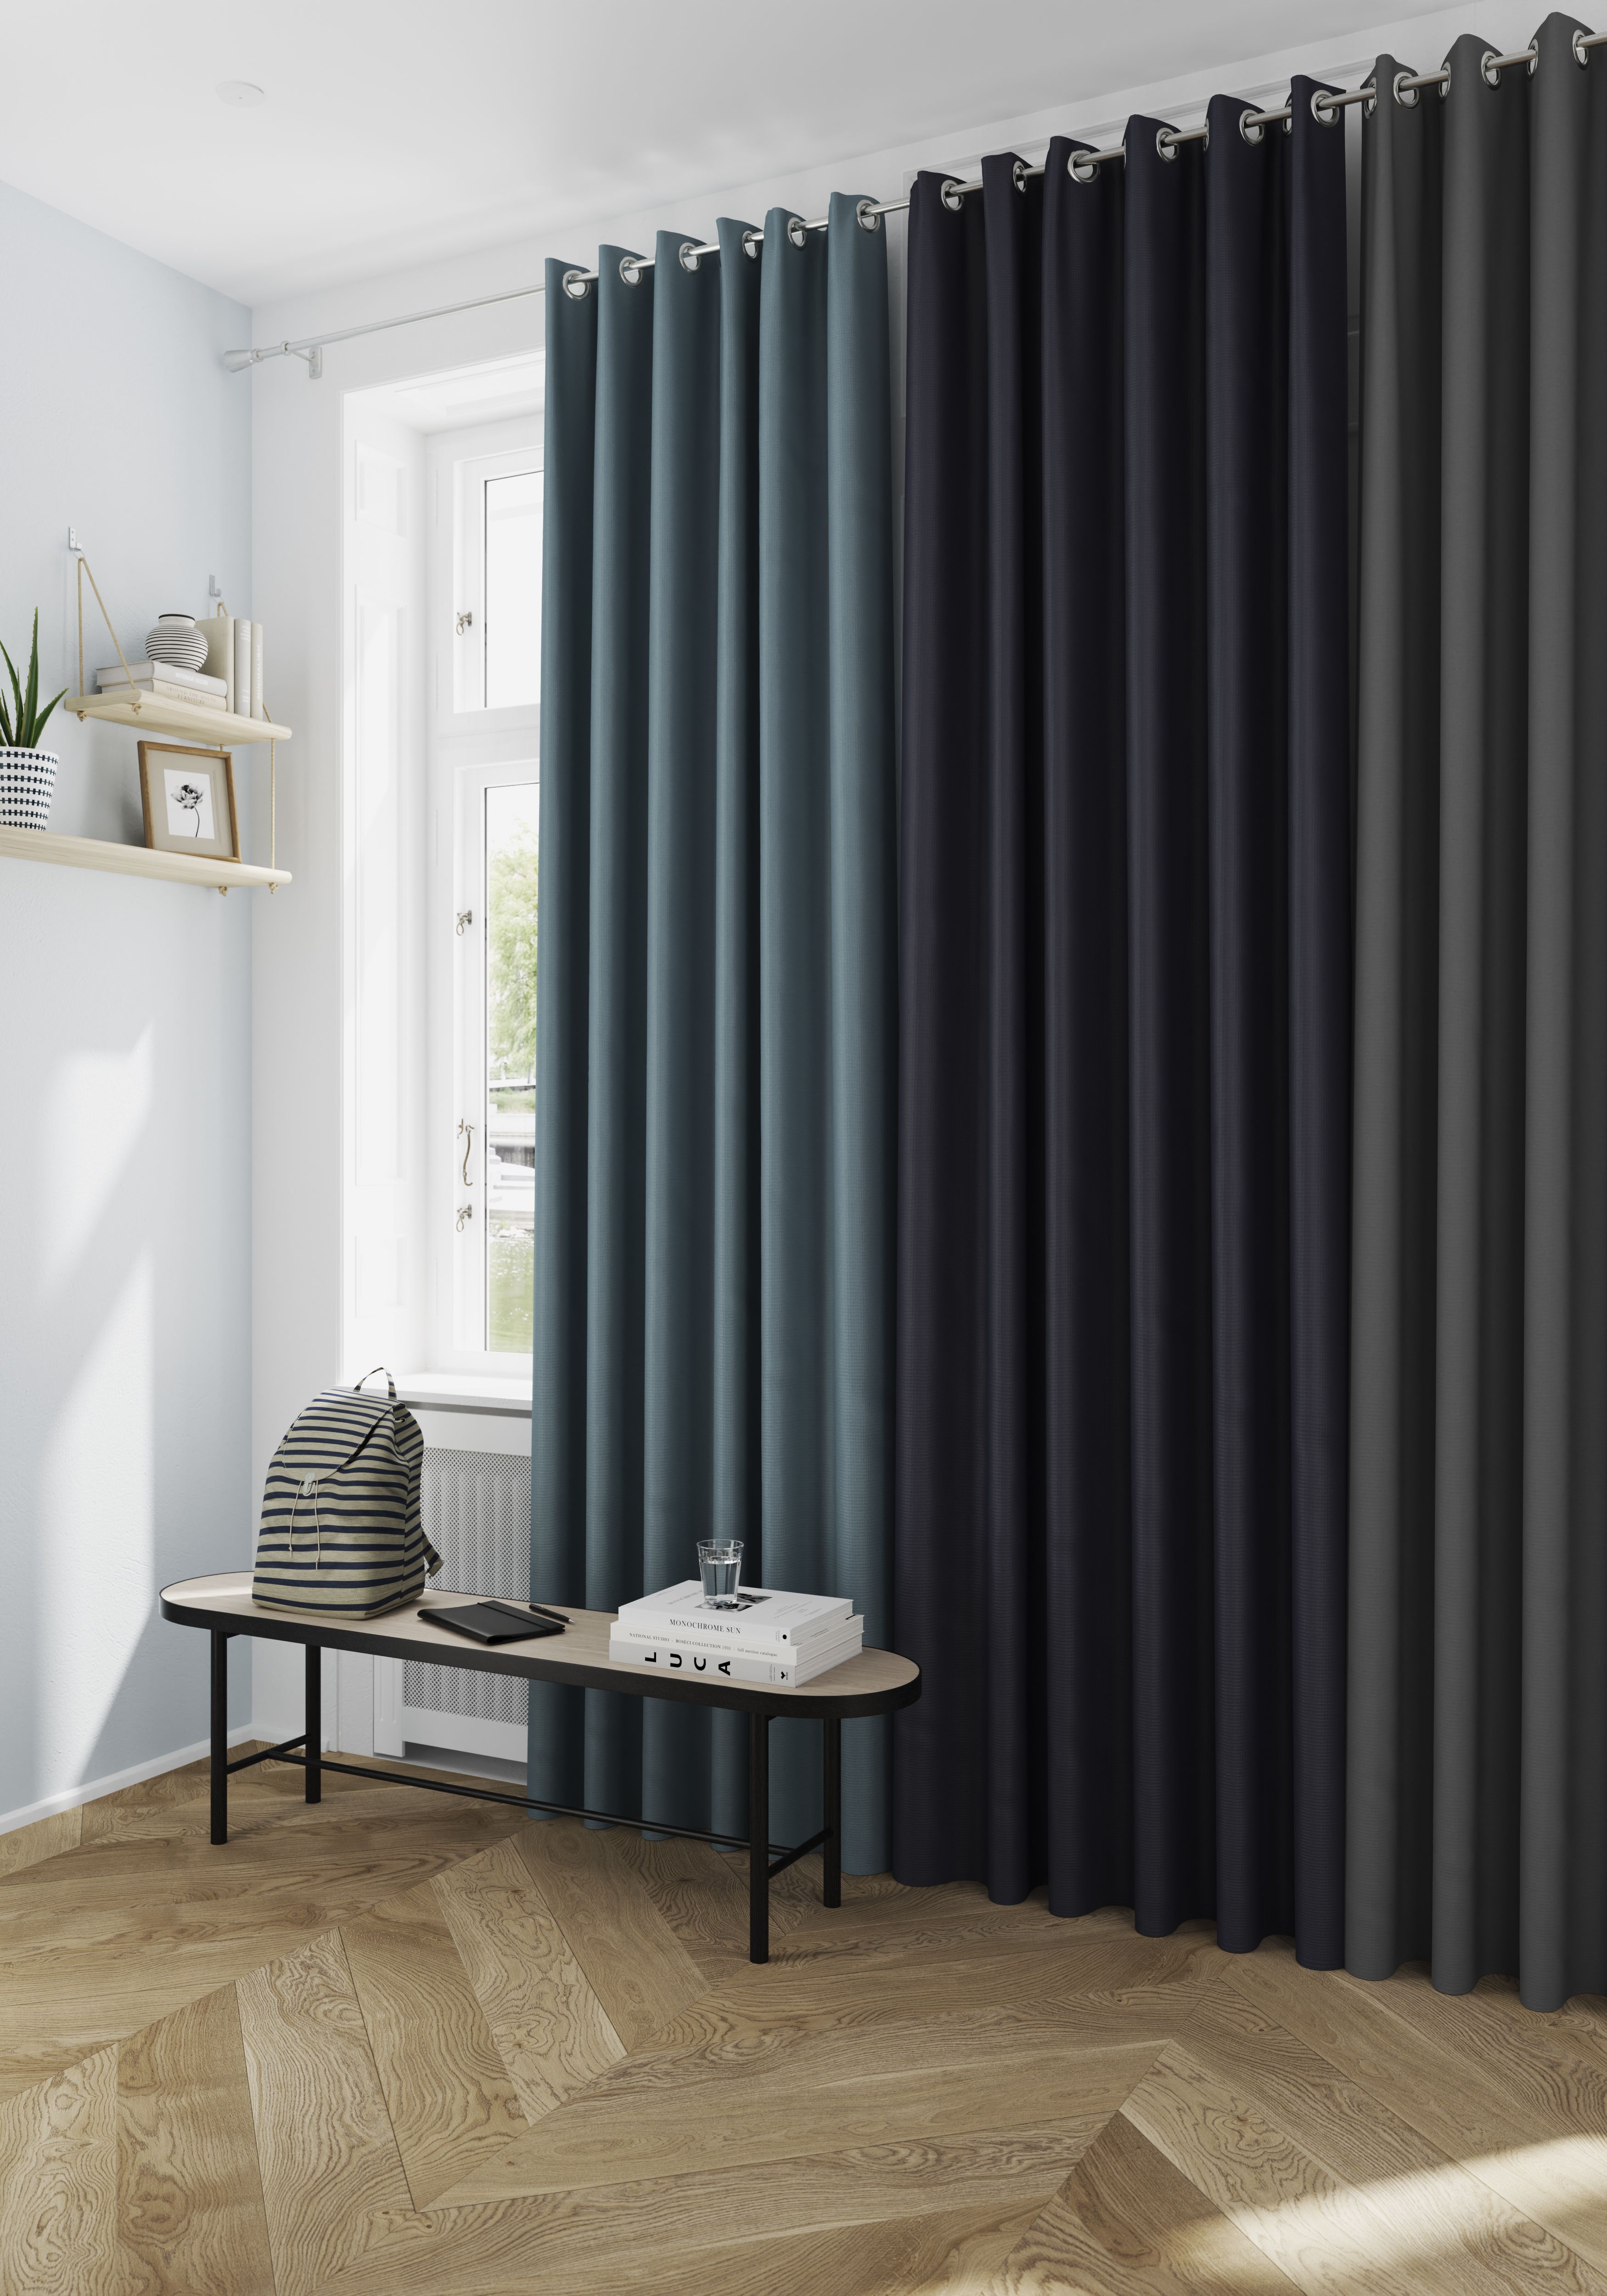 Glend Light blue plain woven Blackout & thermal Eyelet Curtain (W)228cm (L)228cm, Pair